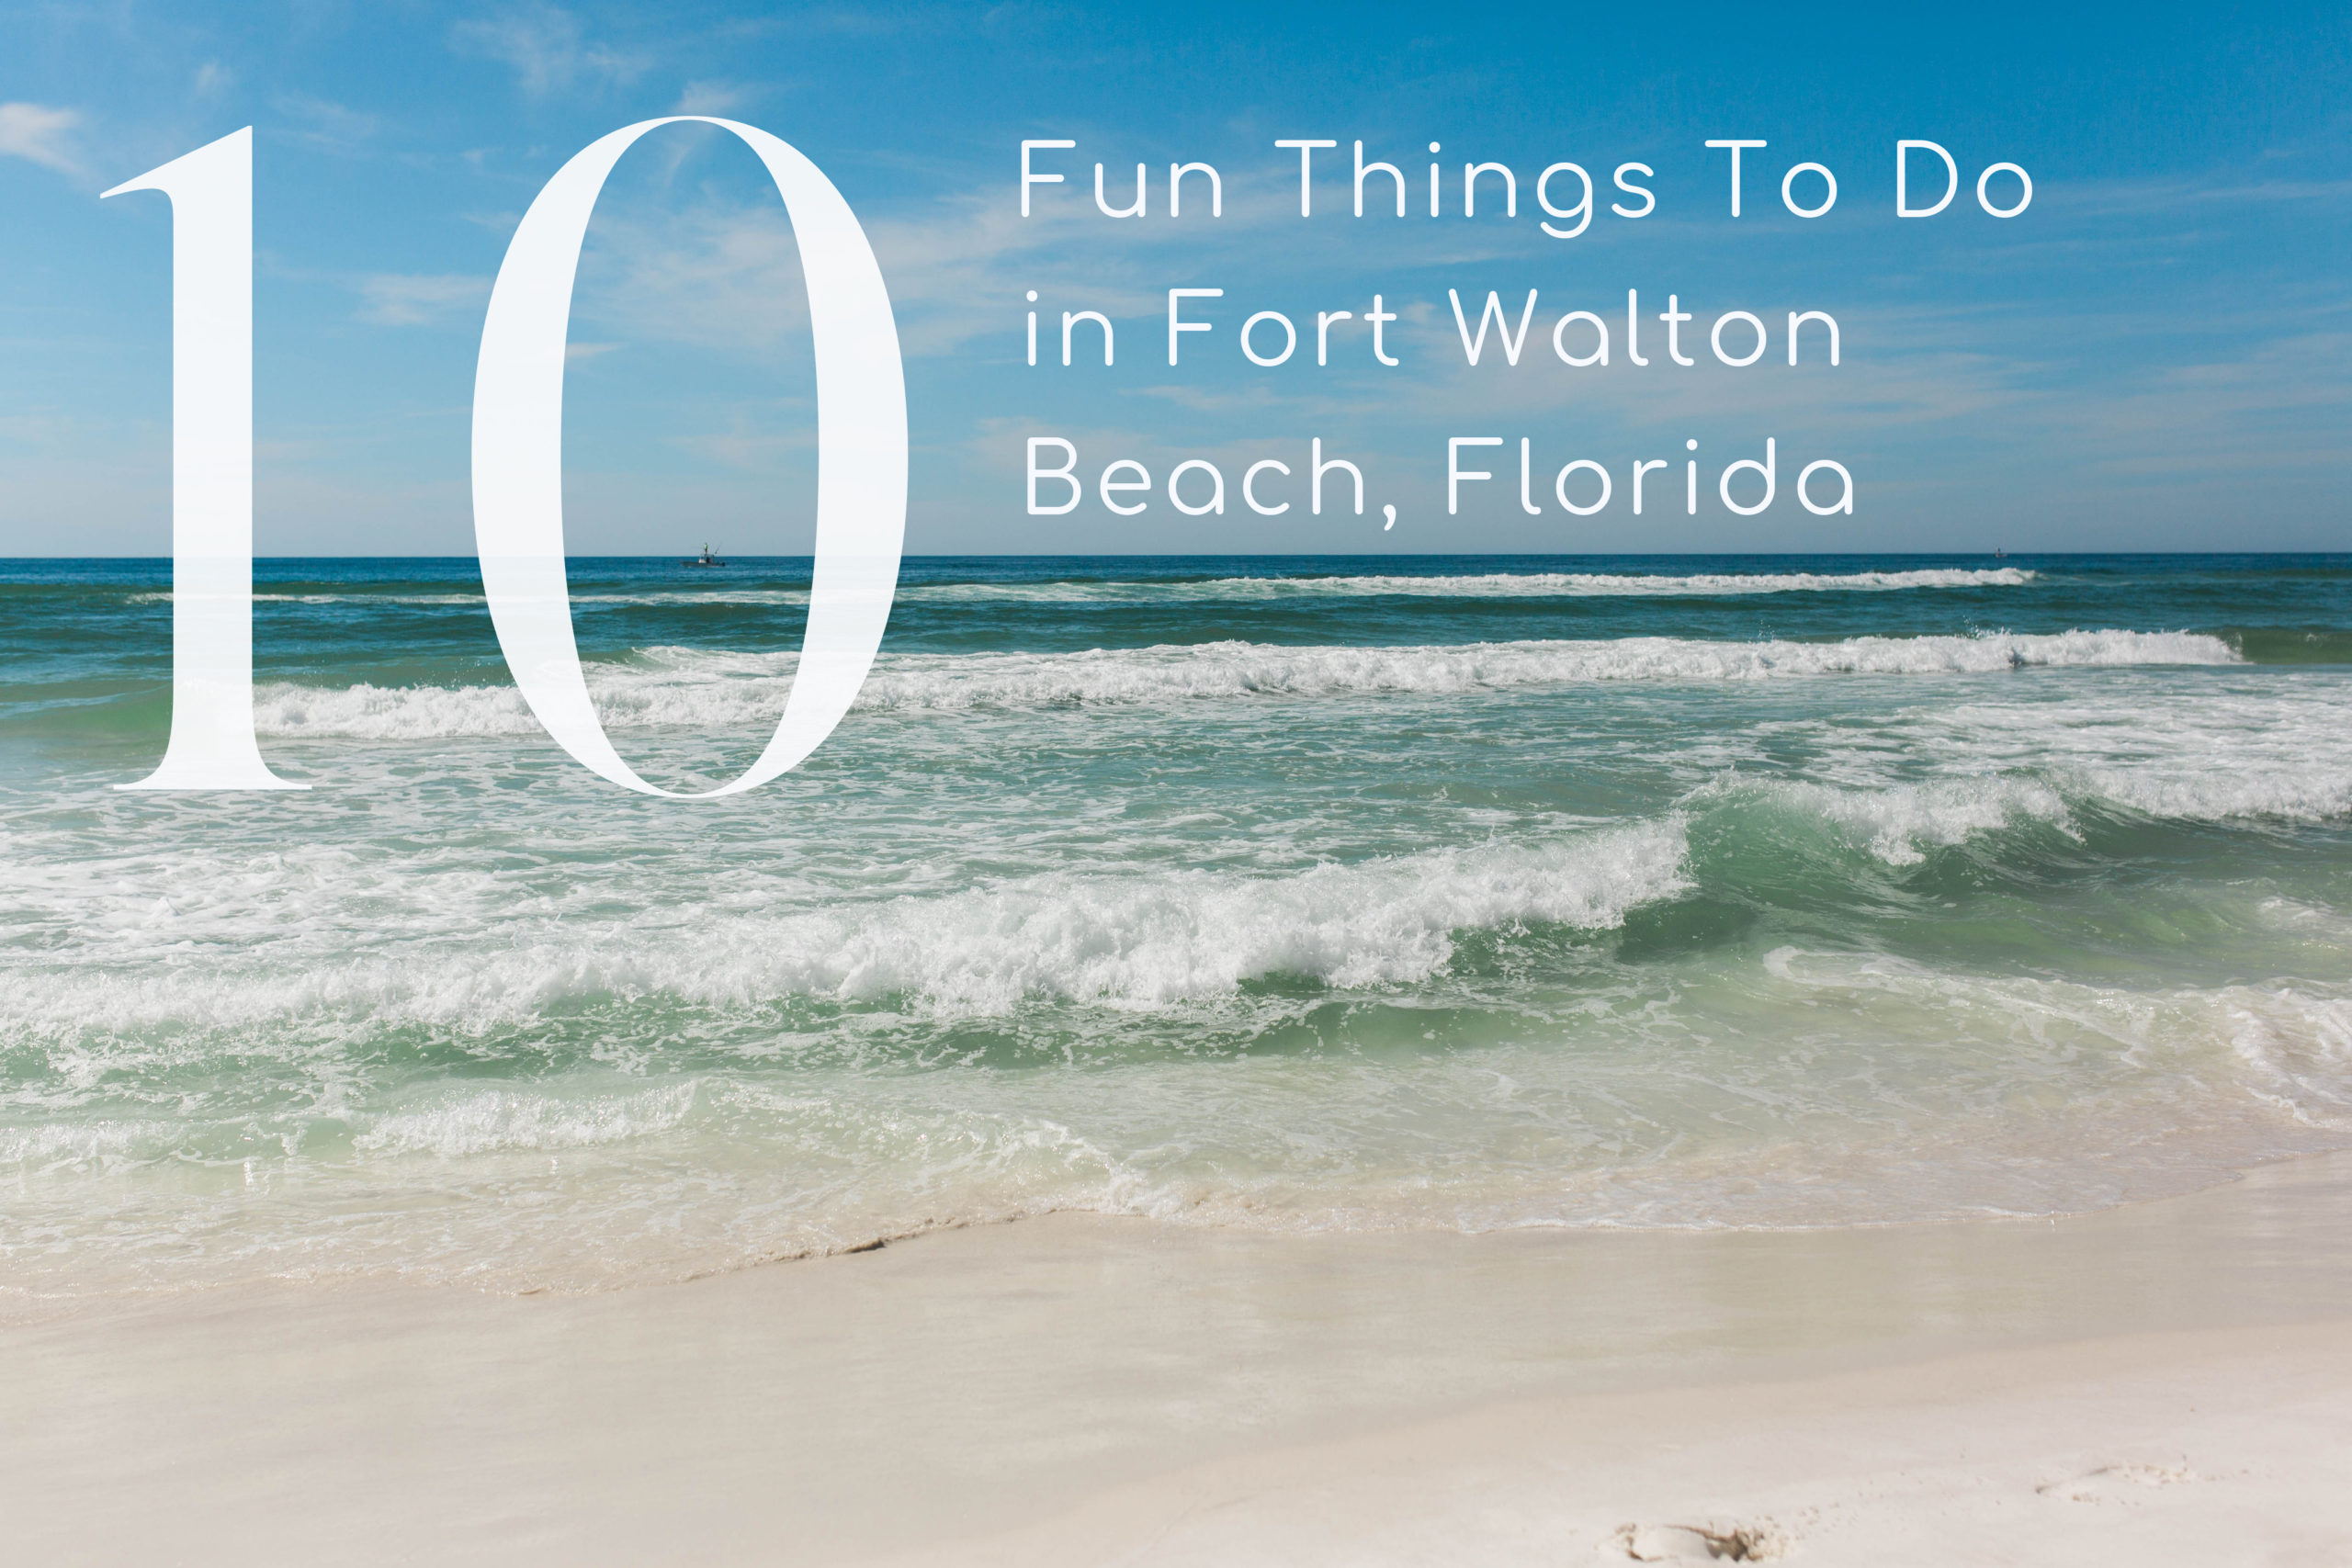 10 fun things to do in fort walton beach, florida